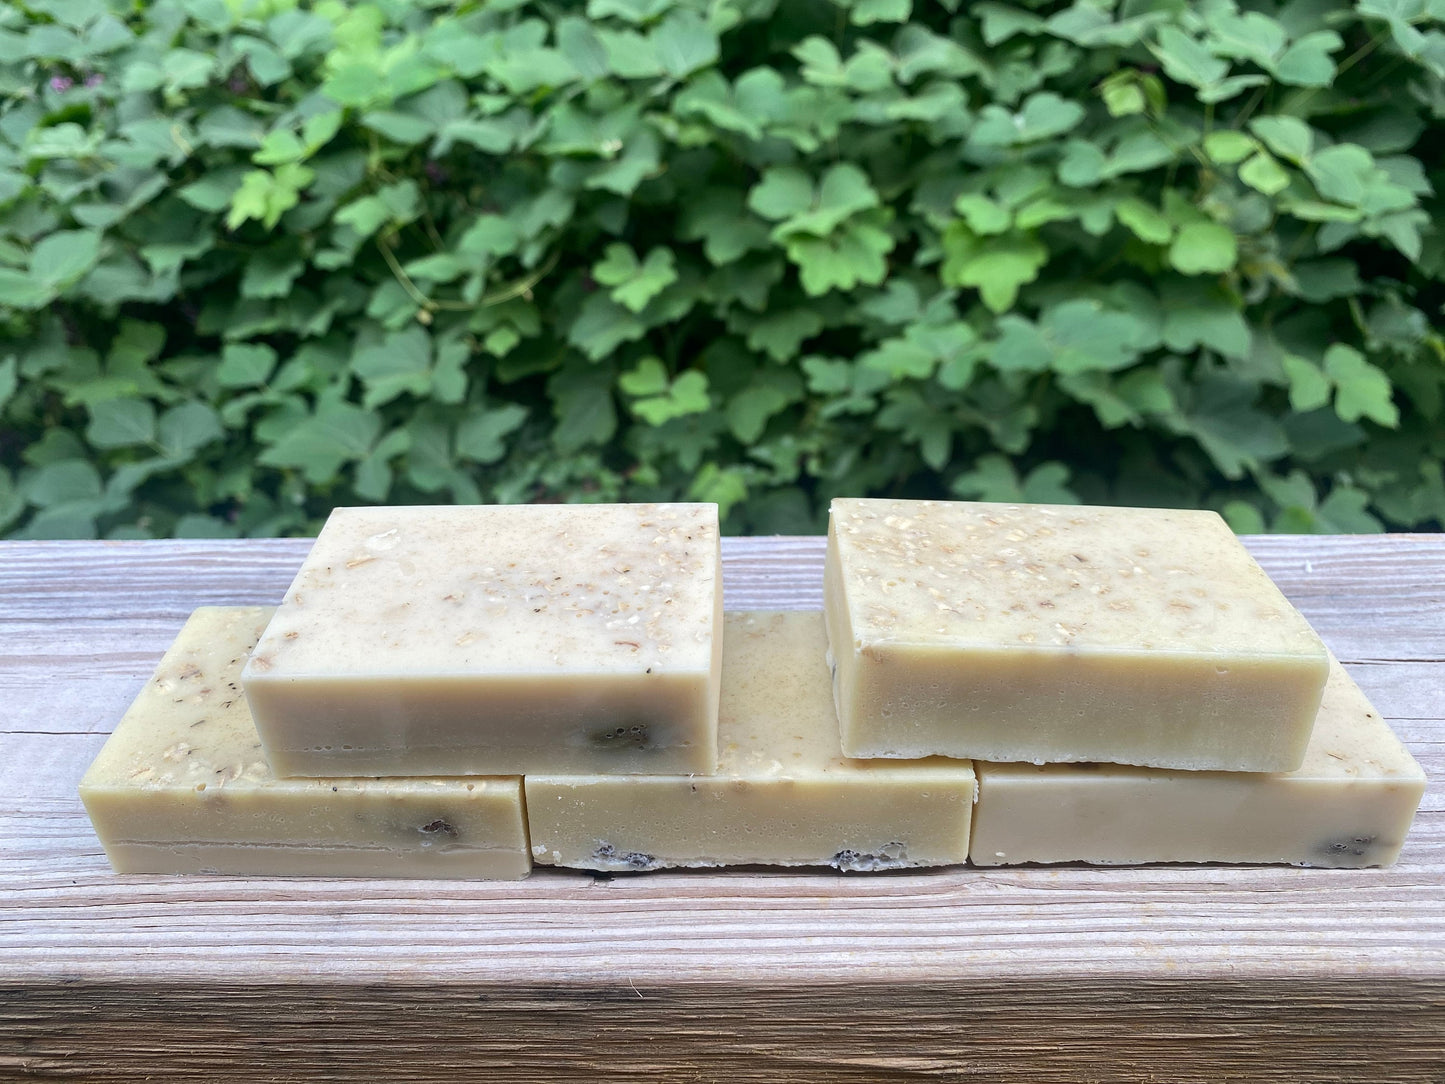 Handmade Soap Recipes for Beginners